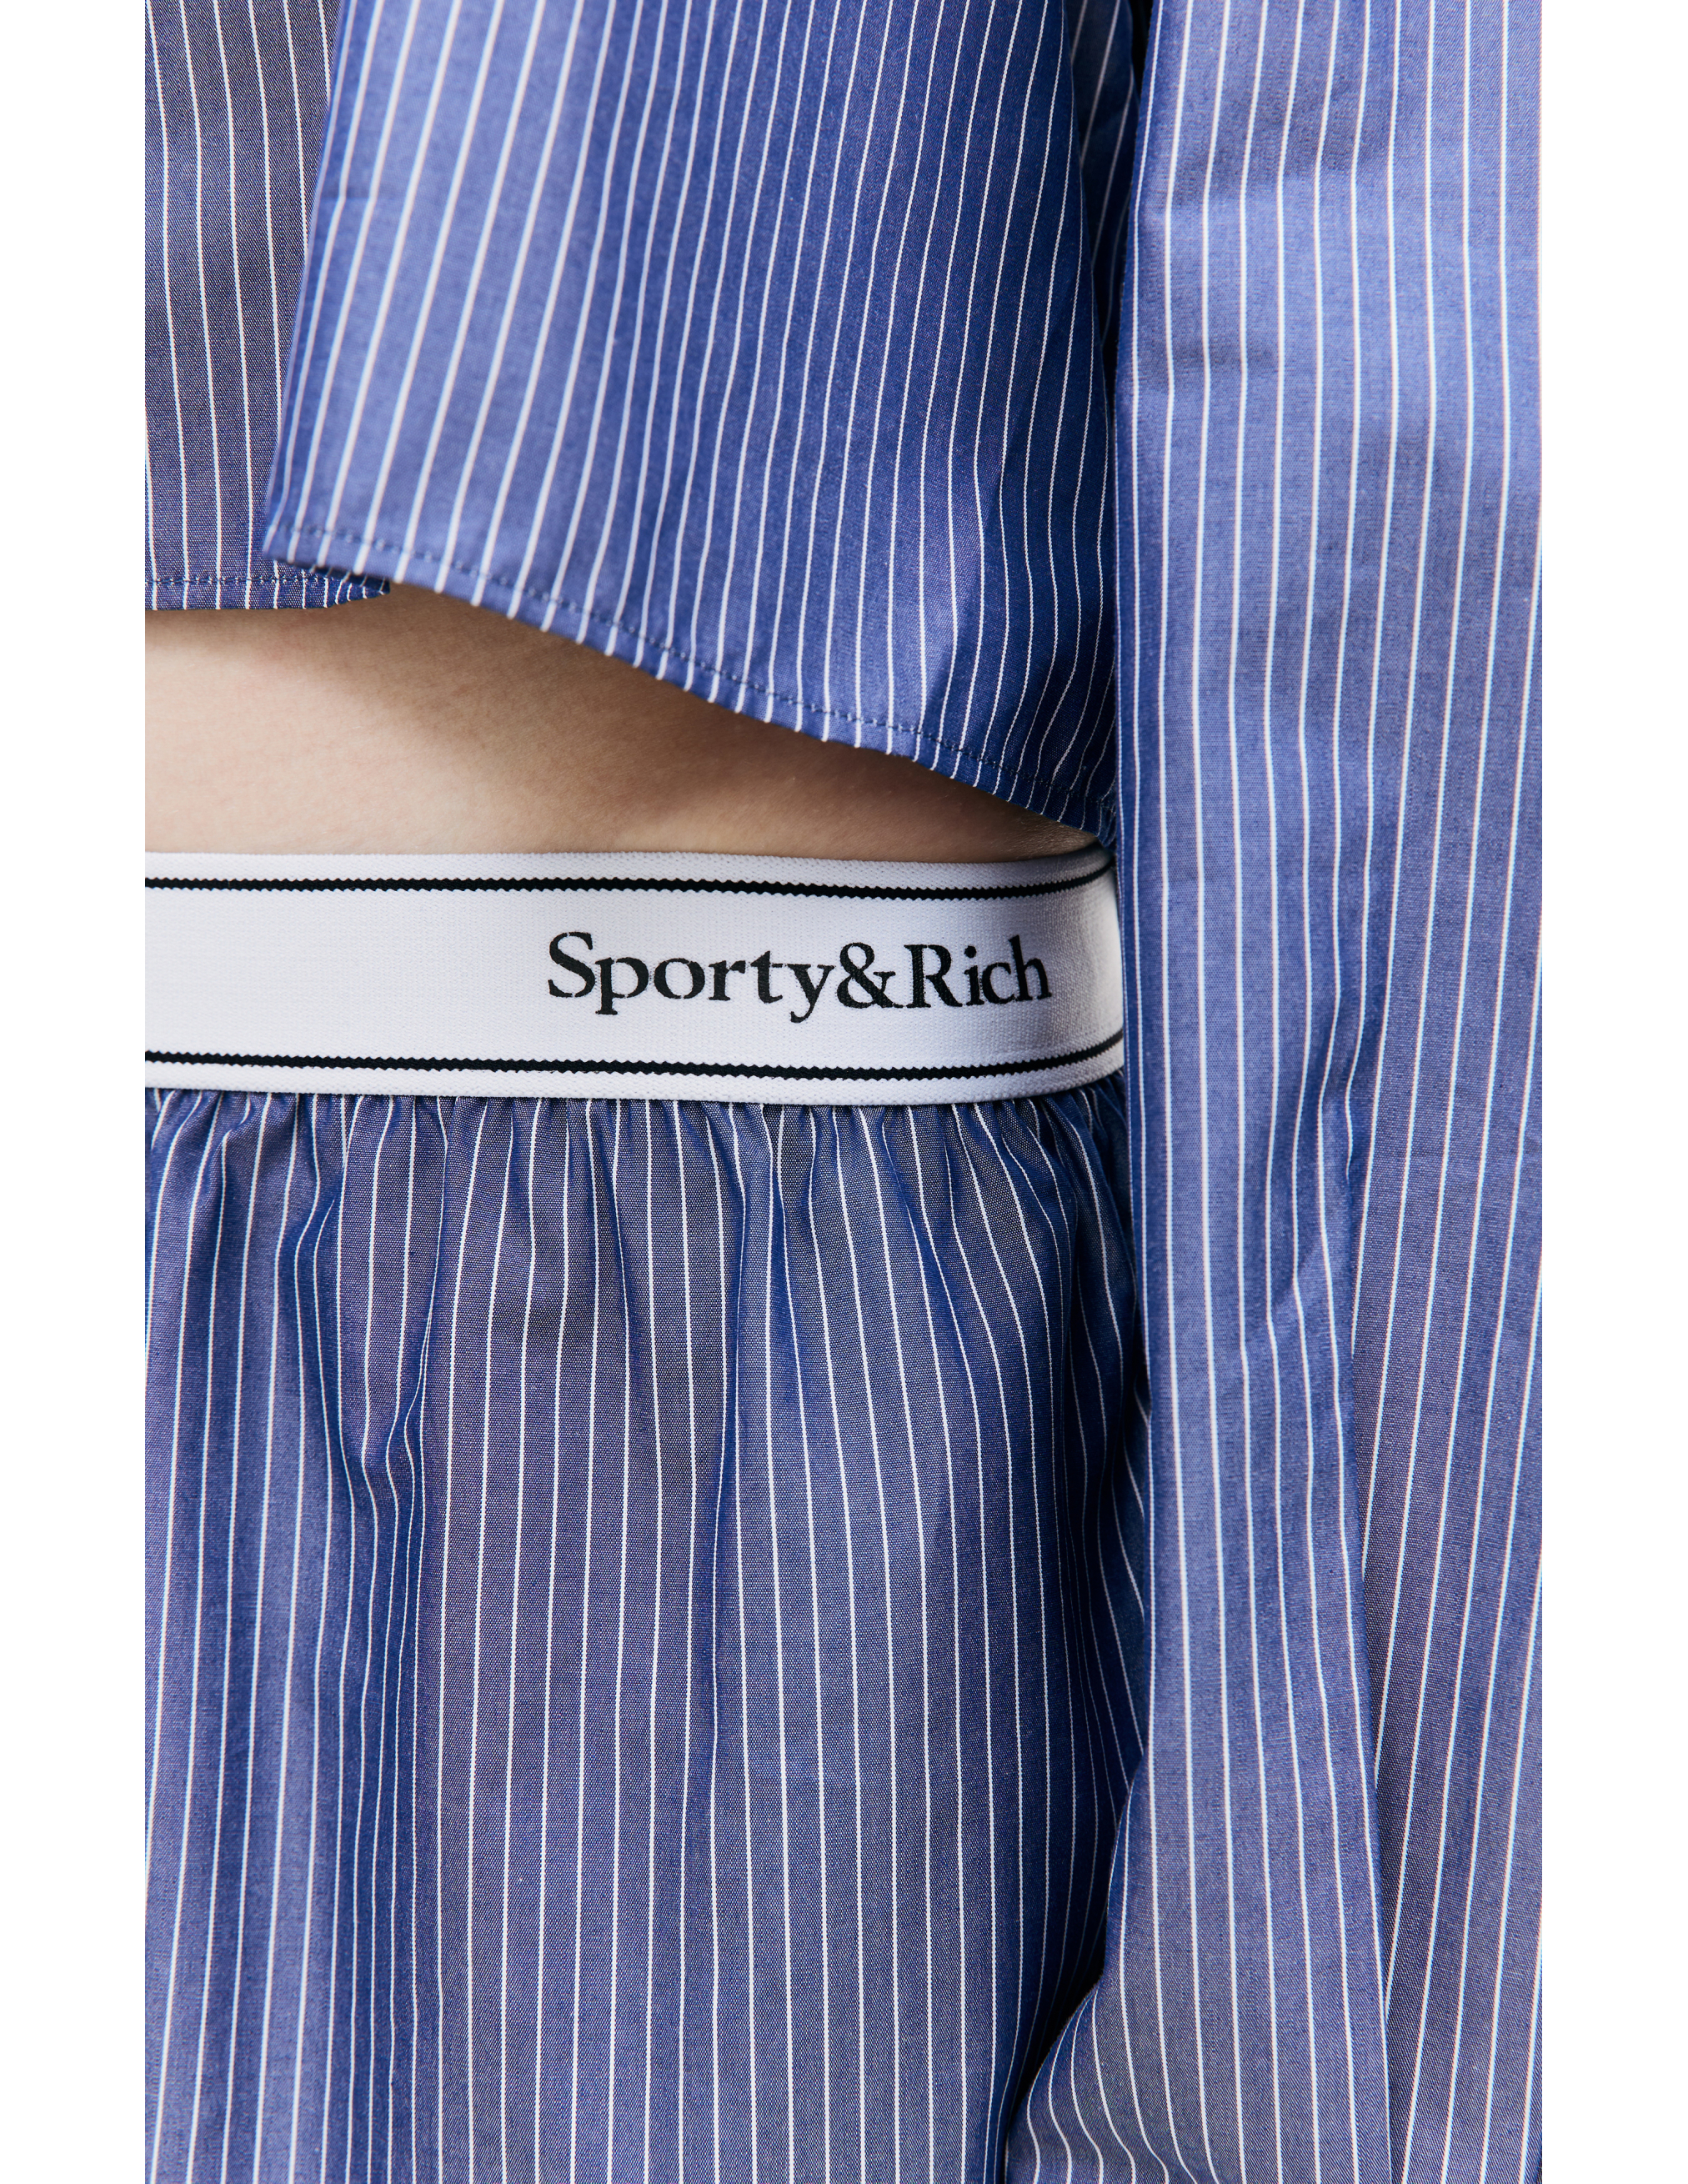 Хлопковые шорты на резинке SPORTY & RICH BOAW233BS, размер S;M;L;XL - фото 5